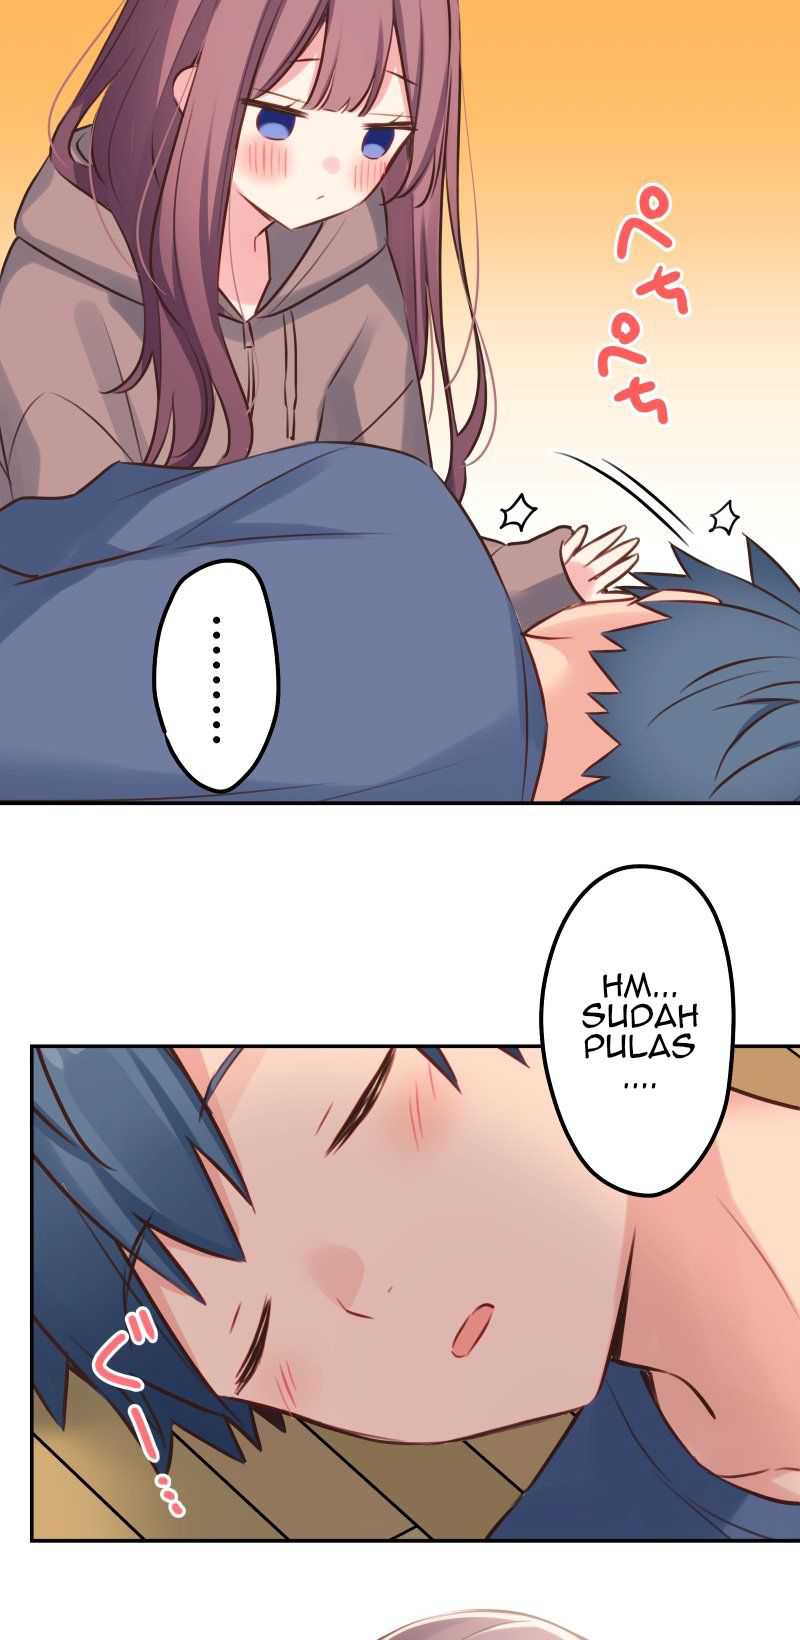 Waka-chan Is Flirty Again Chapter 119